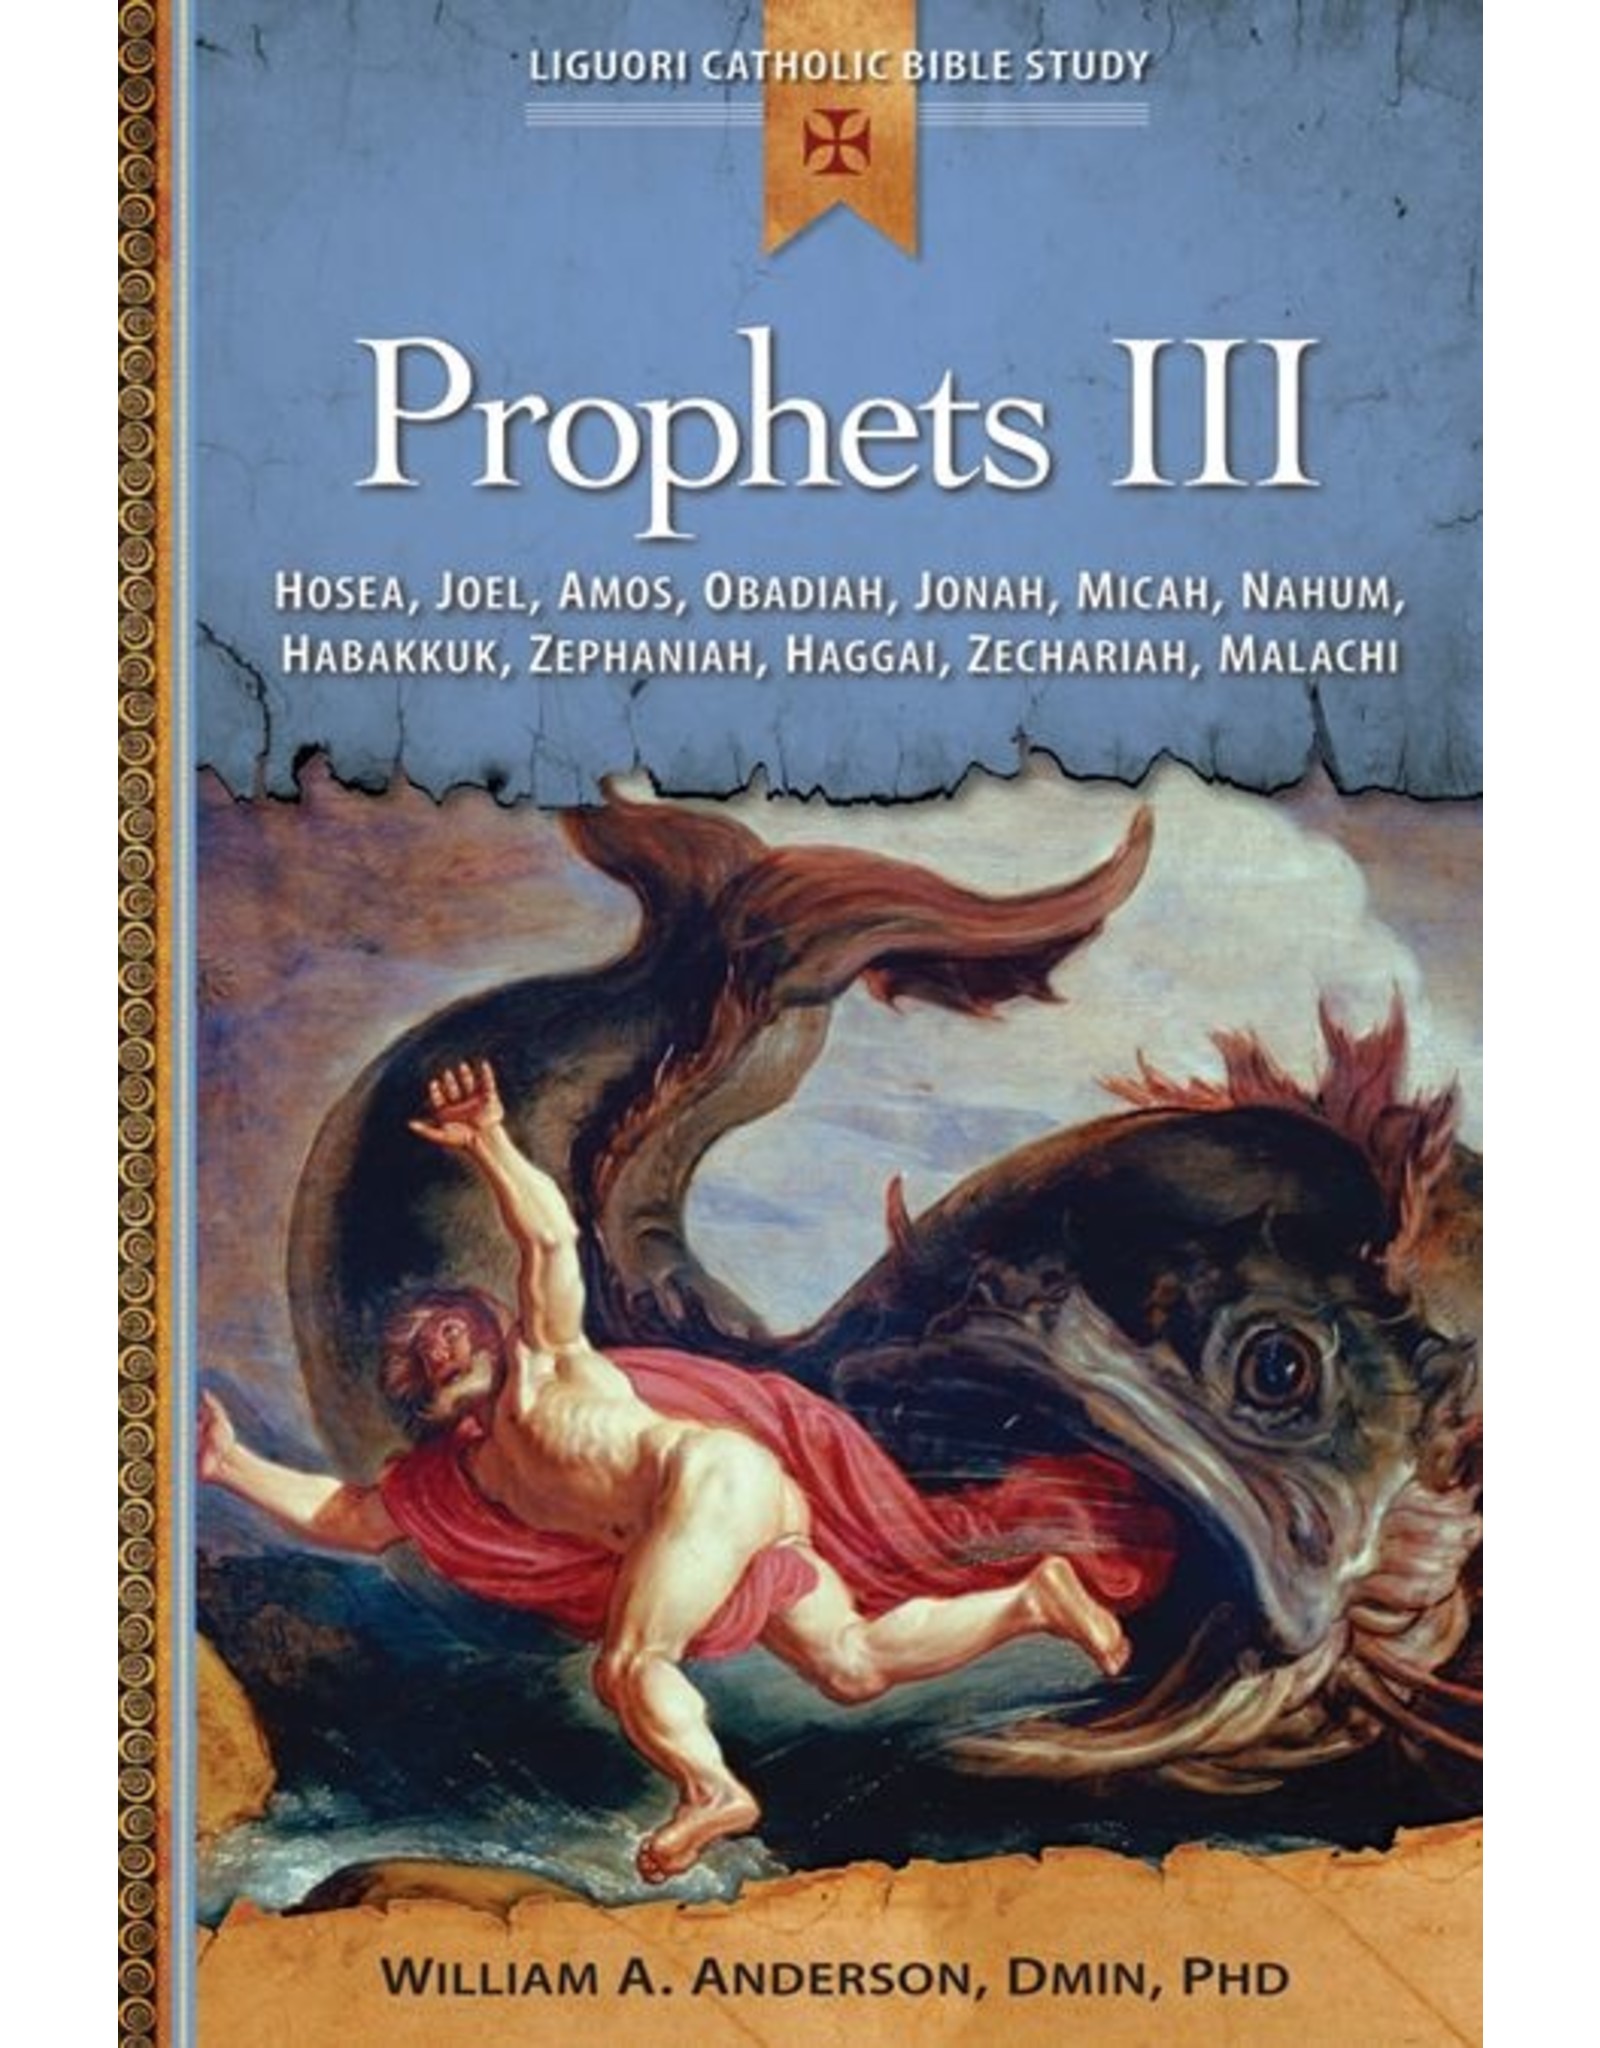 Prophets III: Hosea, Joel, Amos, Obadiah, Jonah, Micah, Nahum, Habakkuk, Zephaniah, Haggai, Zechariah, Malachi